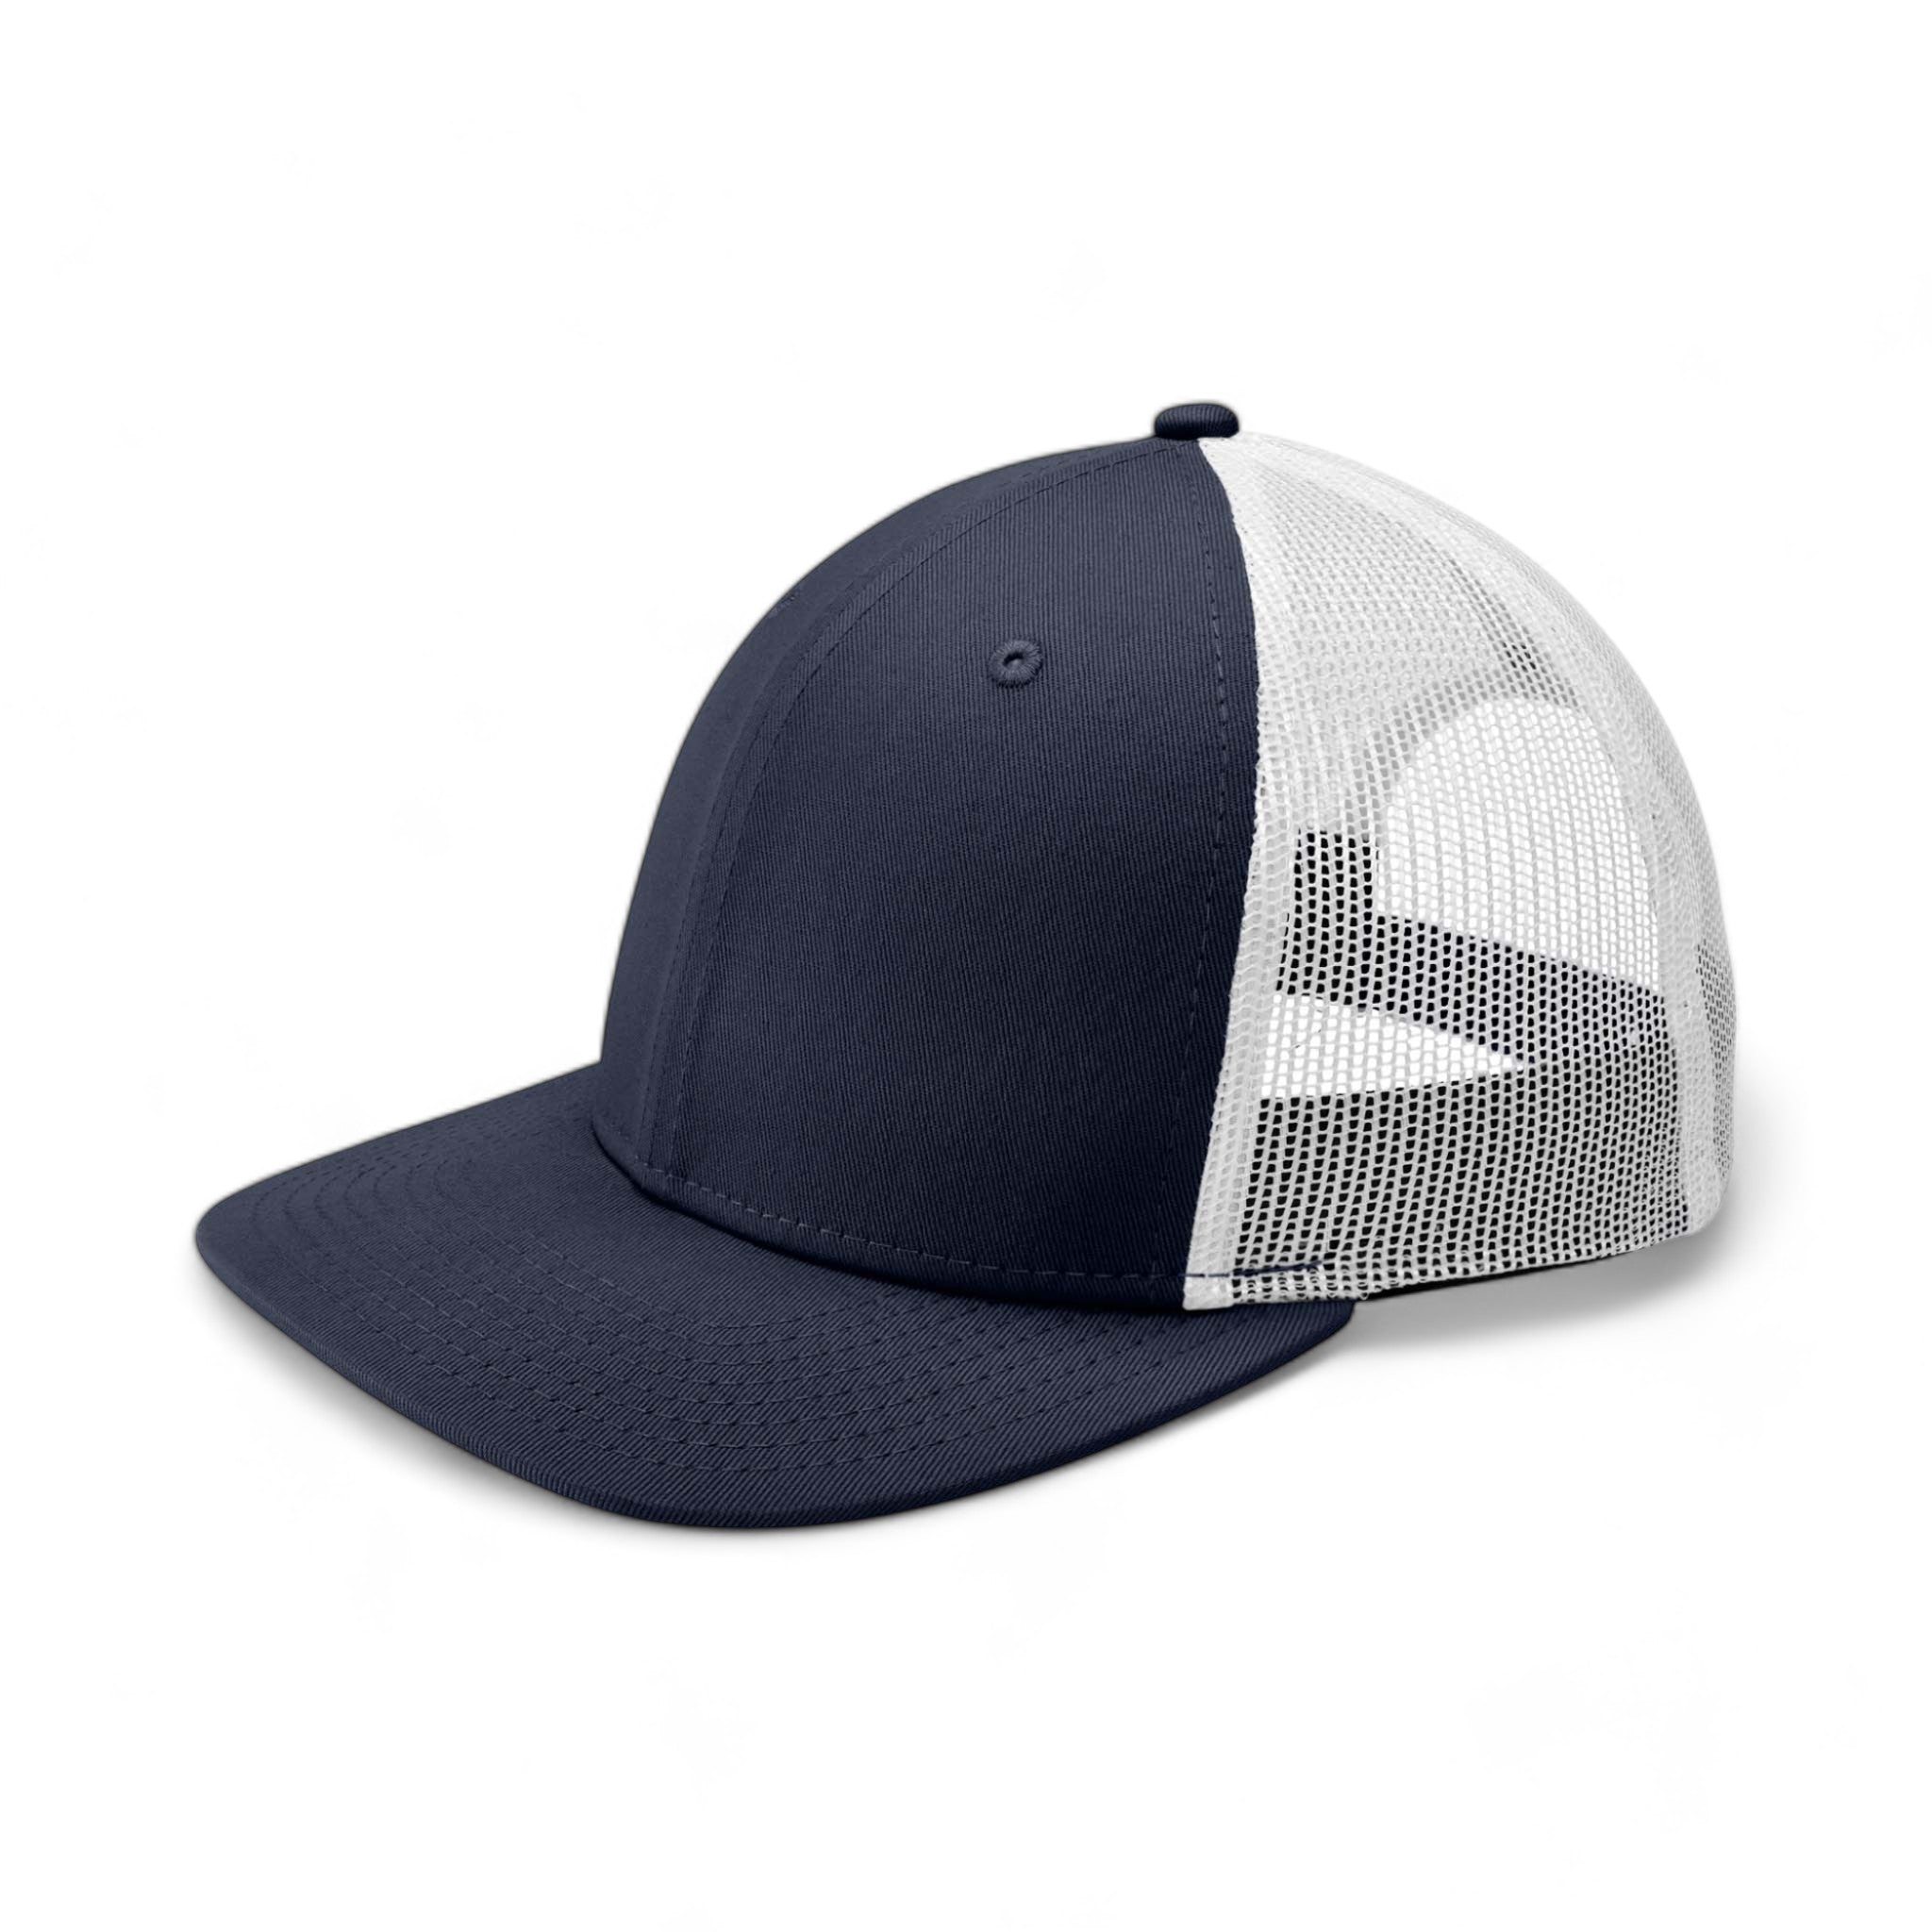 Side view of New Era NE207 custom hat in deep navy and white